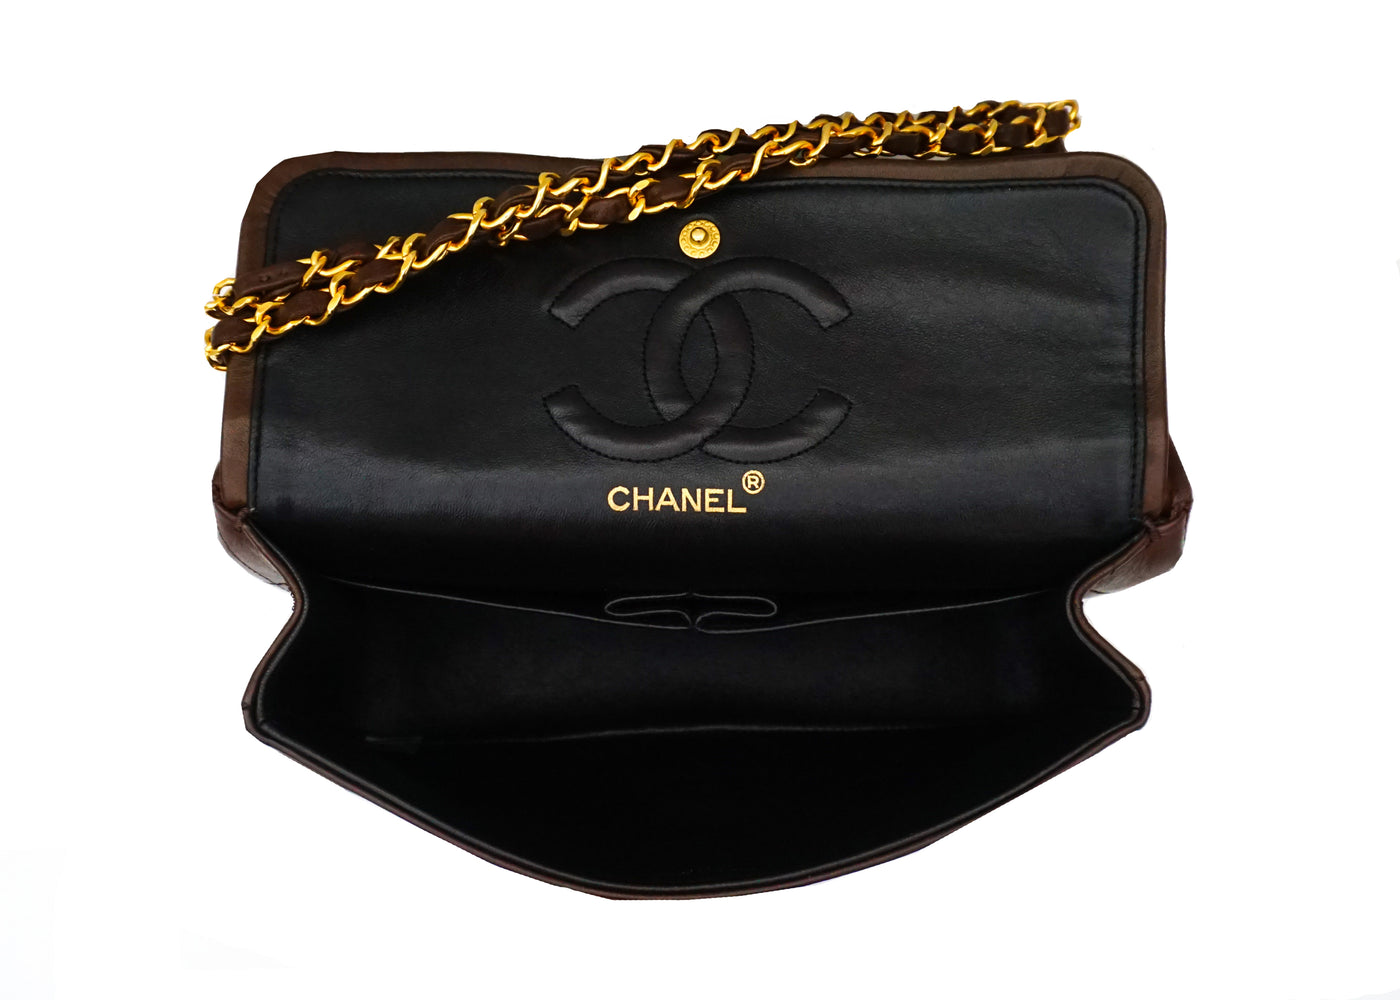 Chanel Vintage Brown Lambskin Medium Classic Double Flap